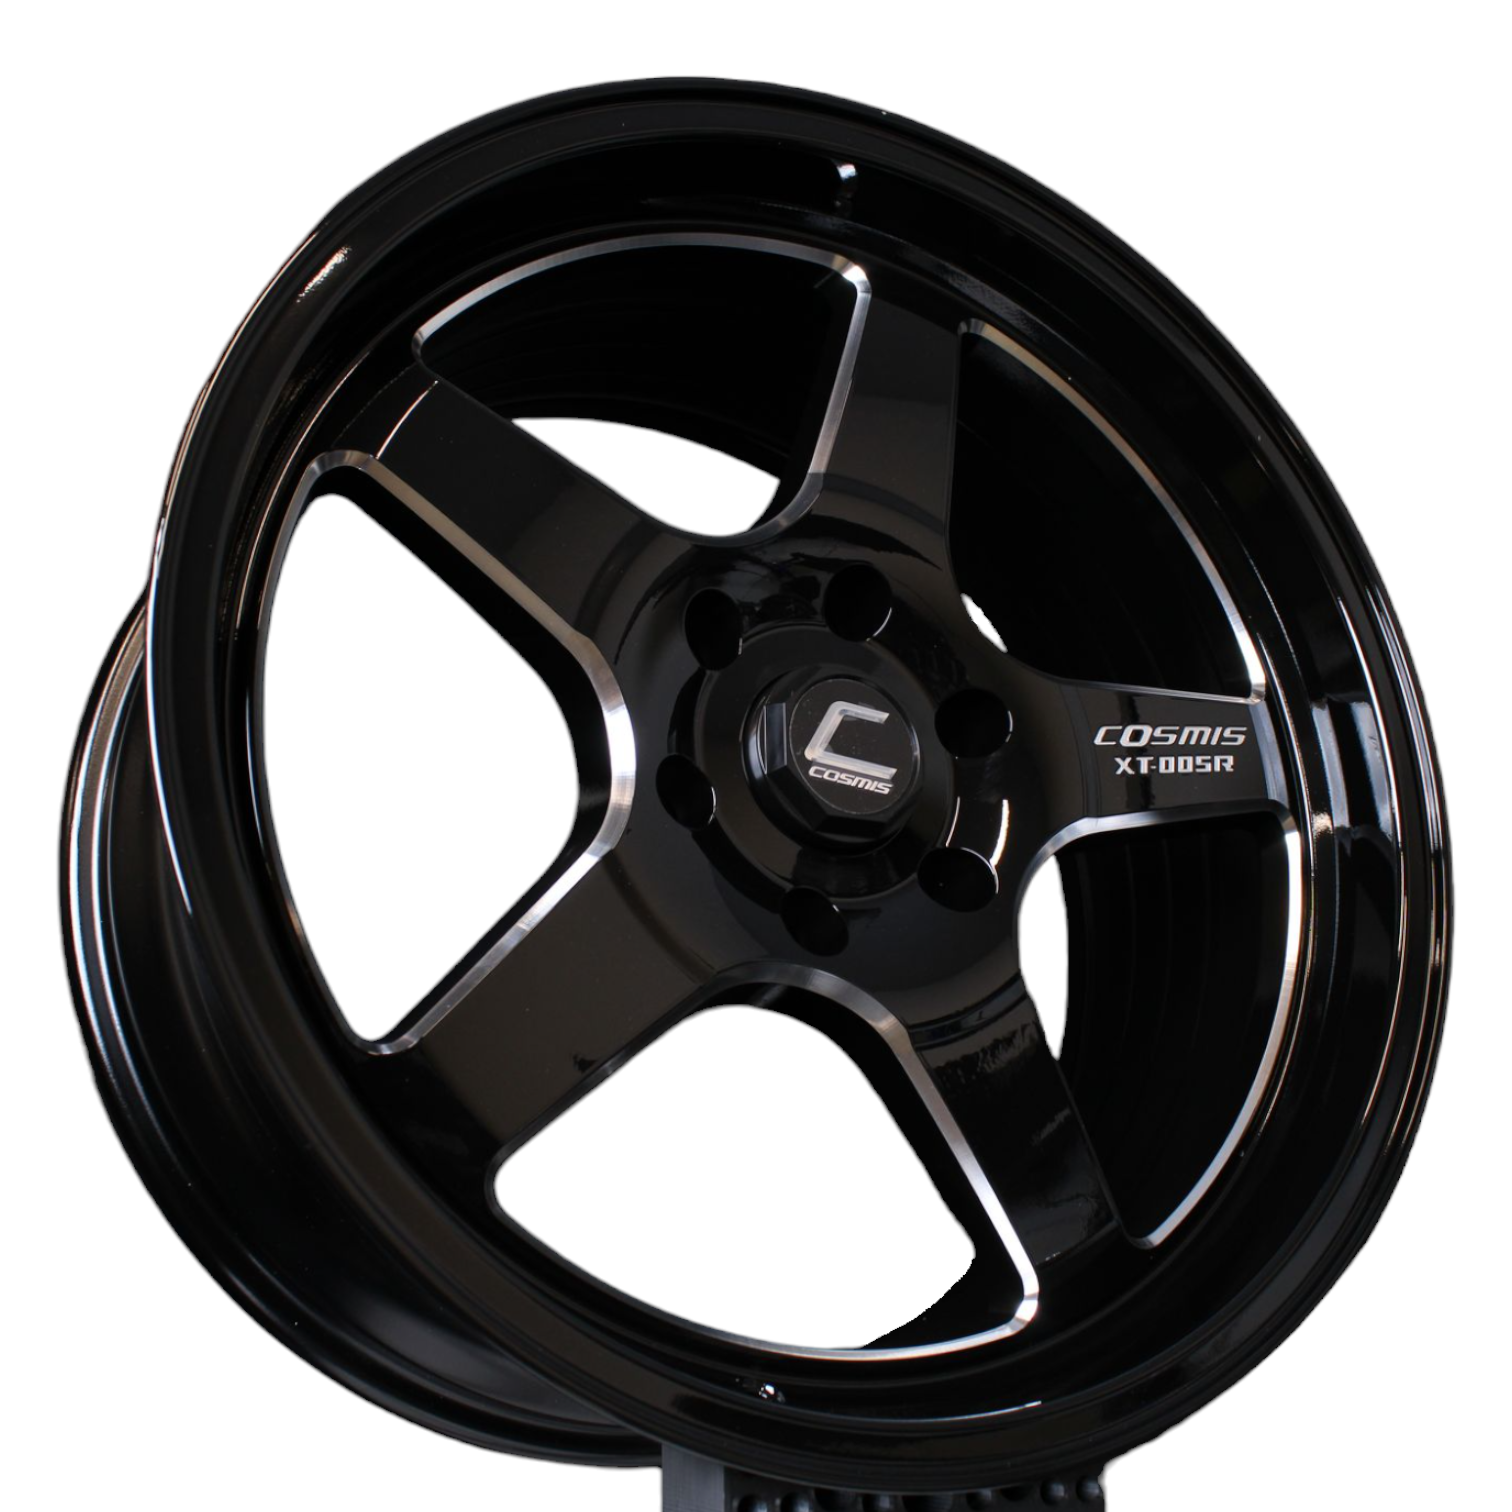 Cosmis Wheels XT-005R Black w/ Machined Spoke 20x9.5 +15 6x139.7